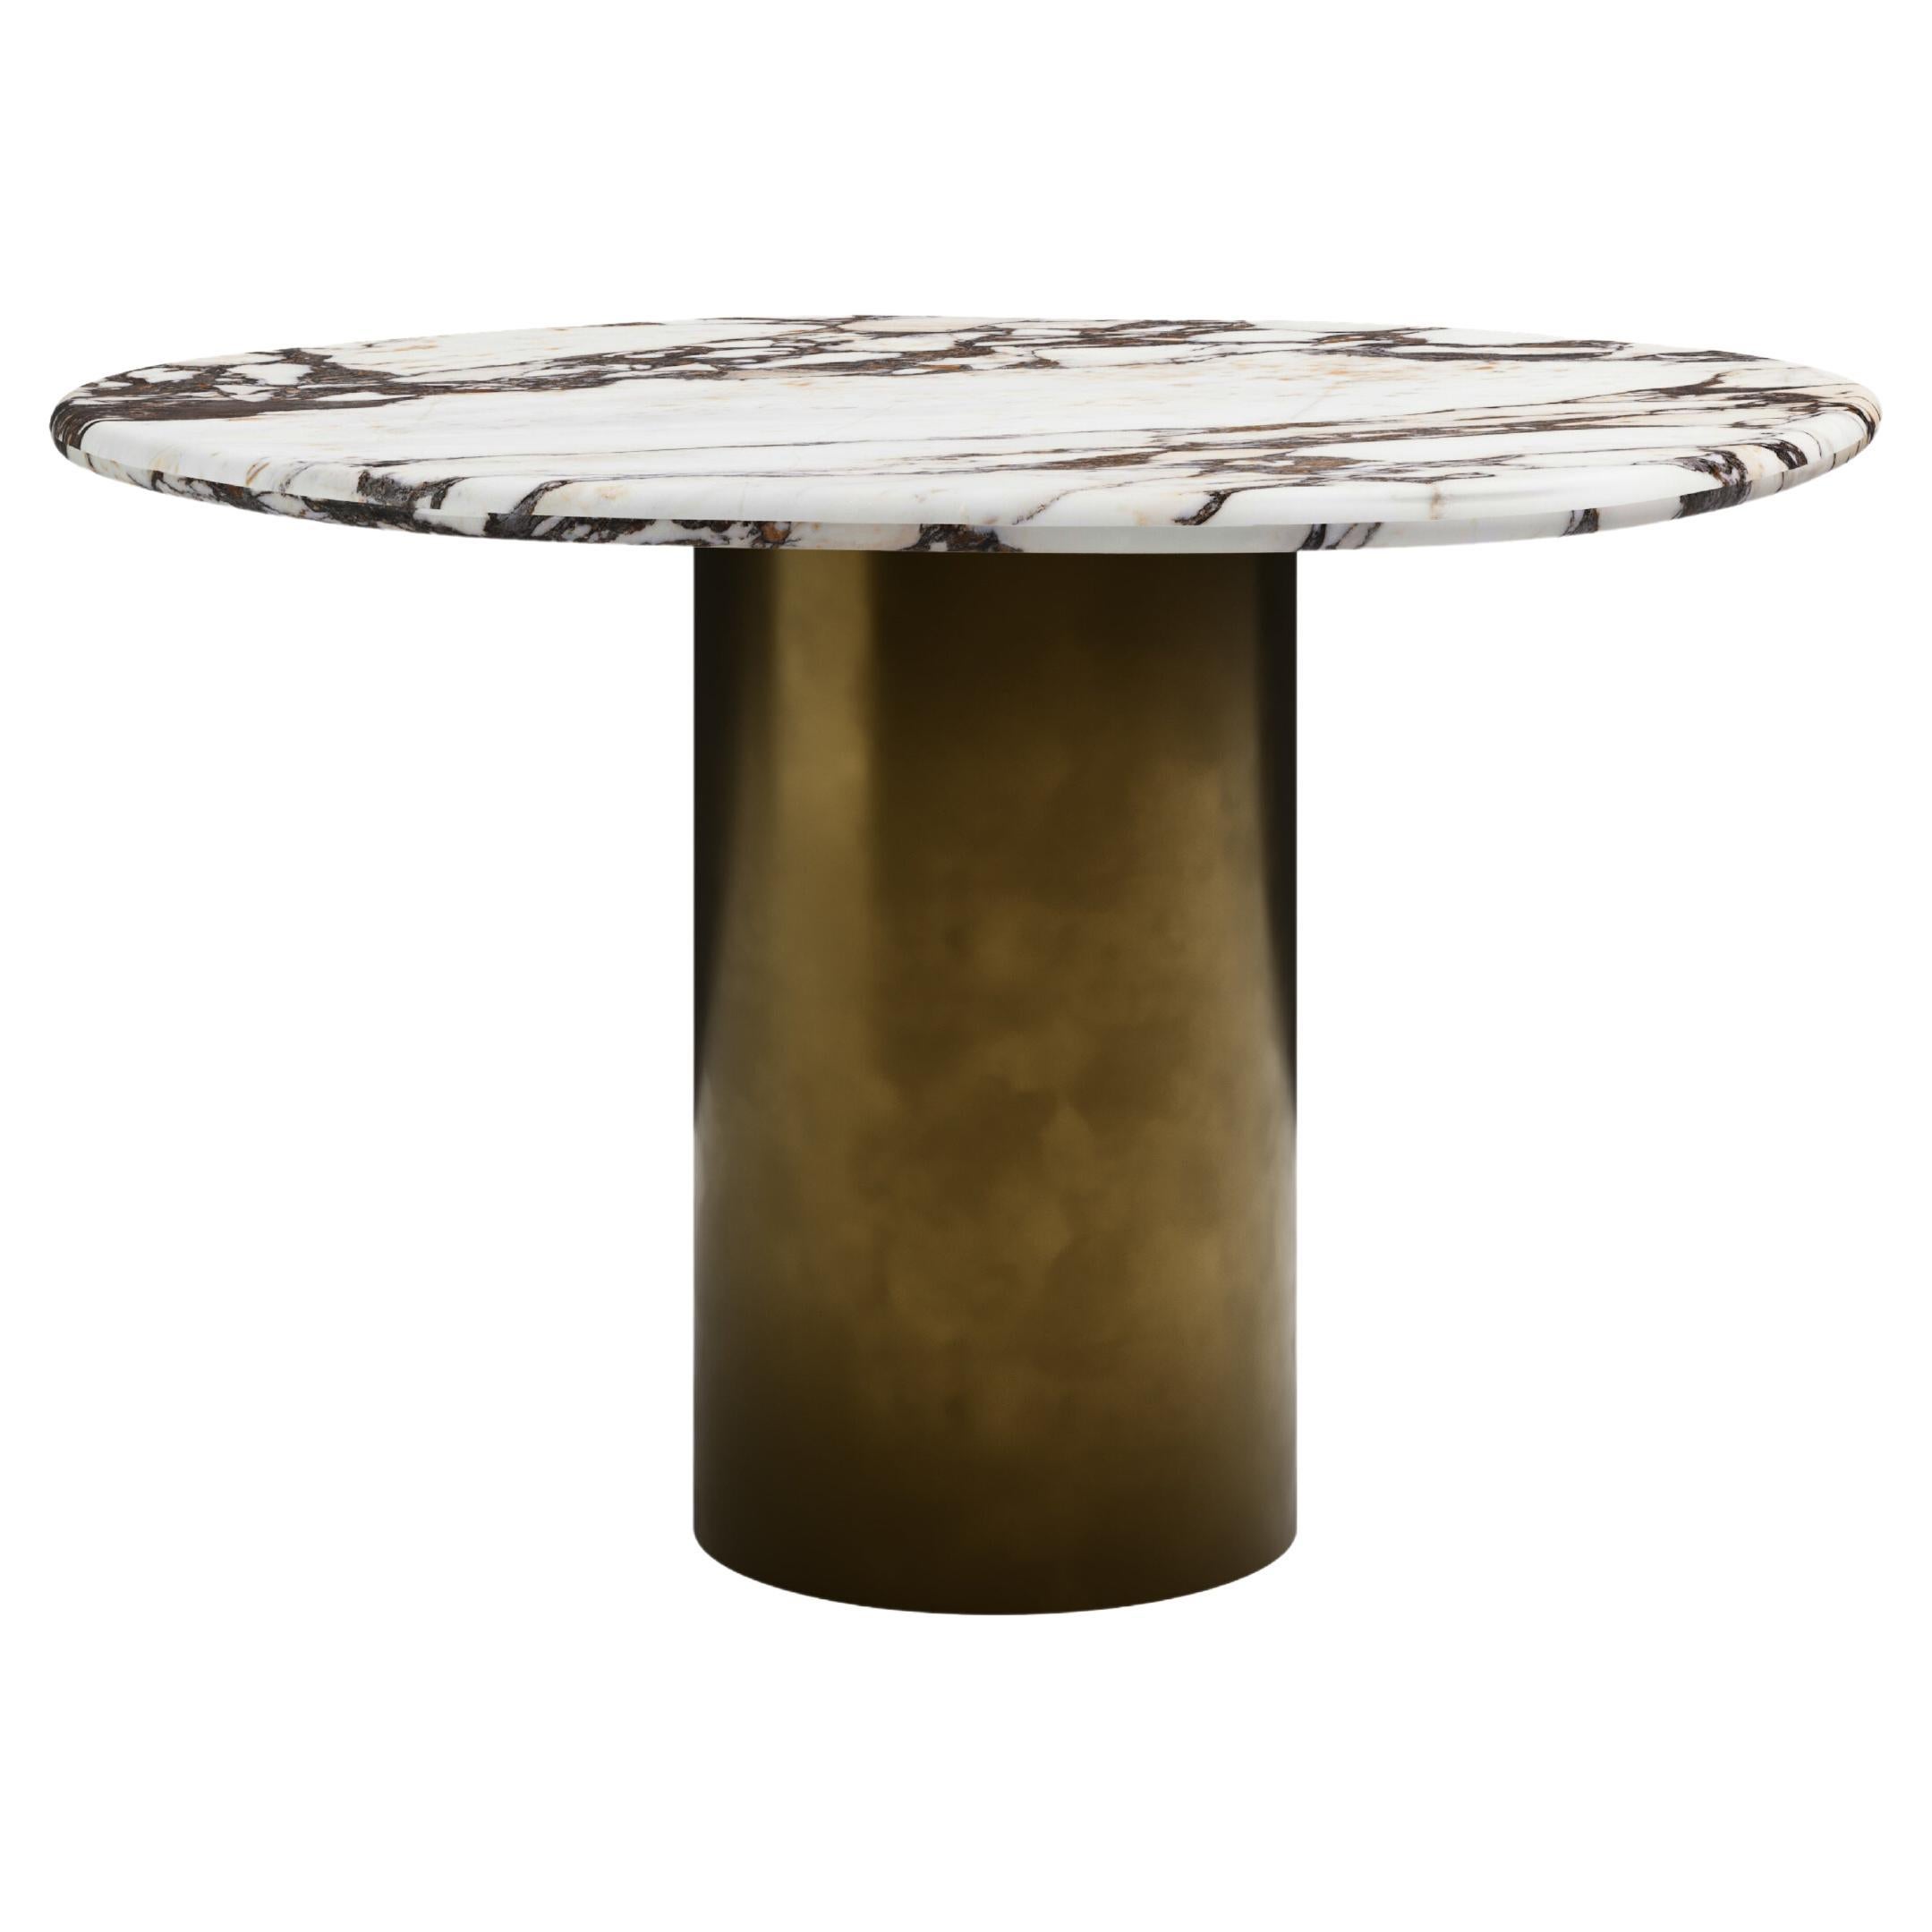 FORM(LA) Lago Round Dining Table 60”L x 60”W x 30”H Viola Marble & Bronze For Sale